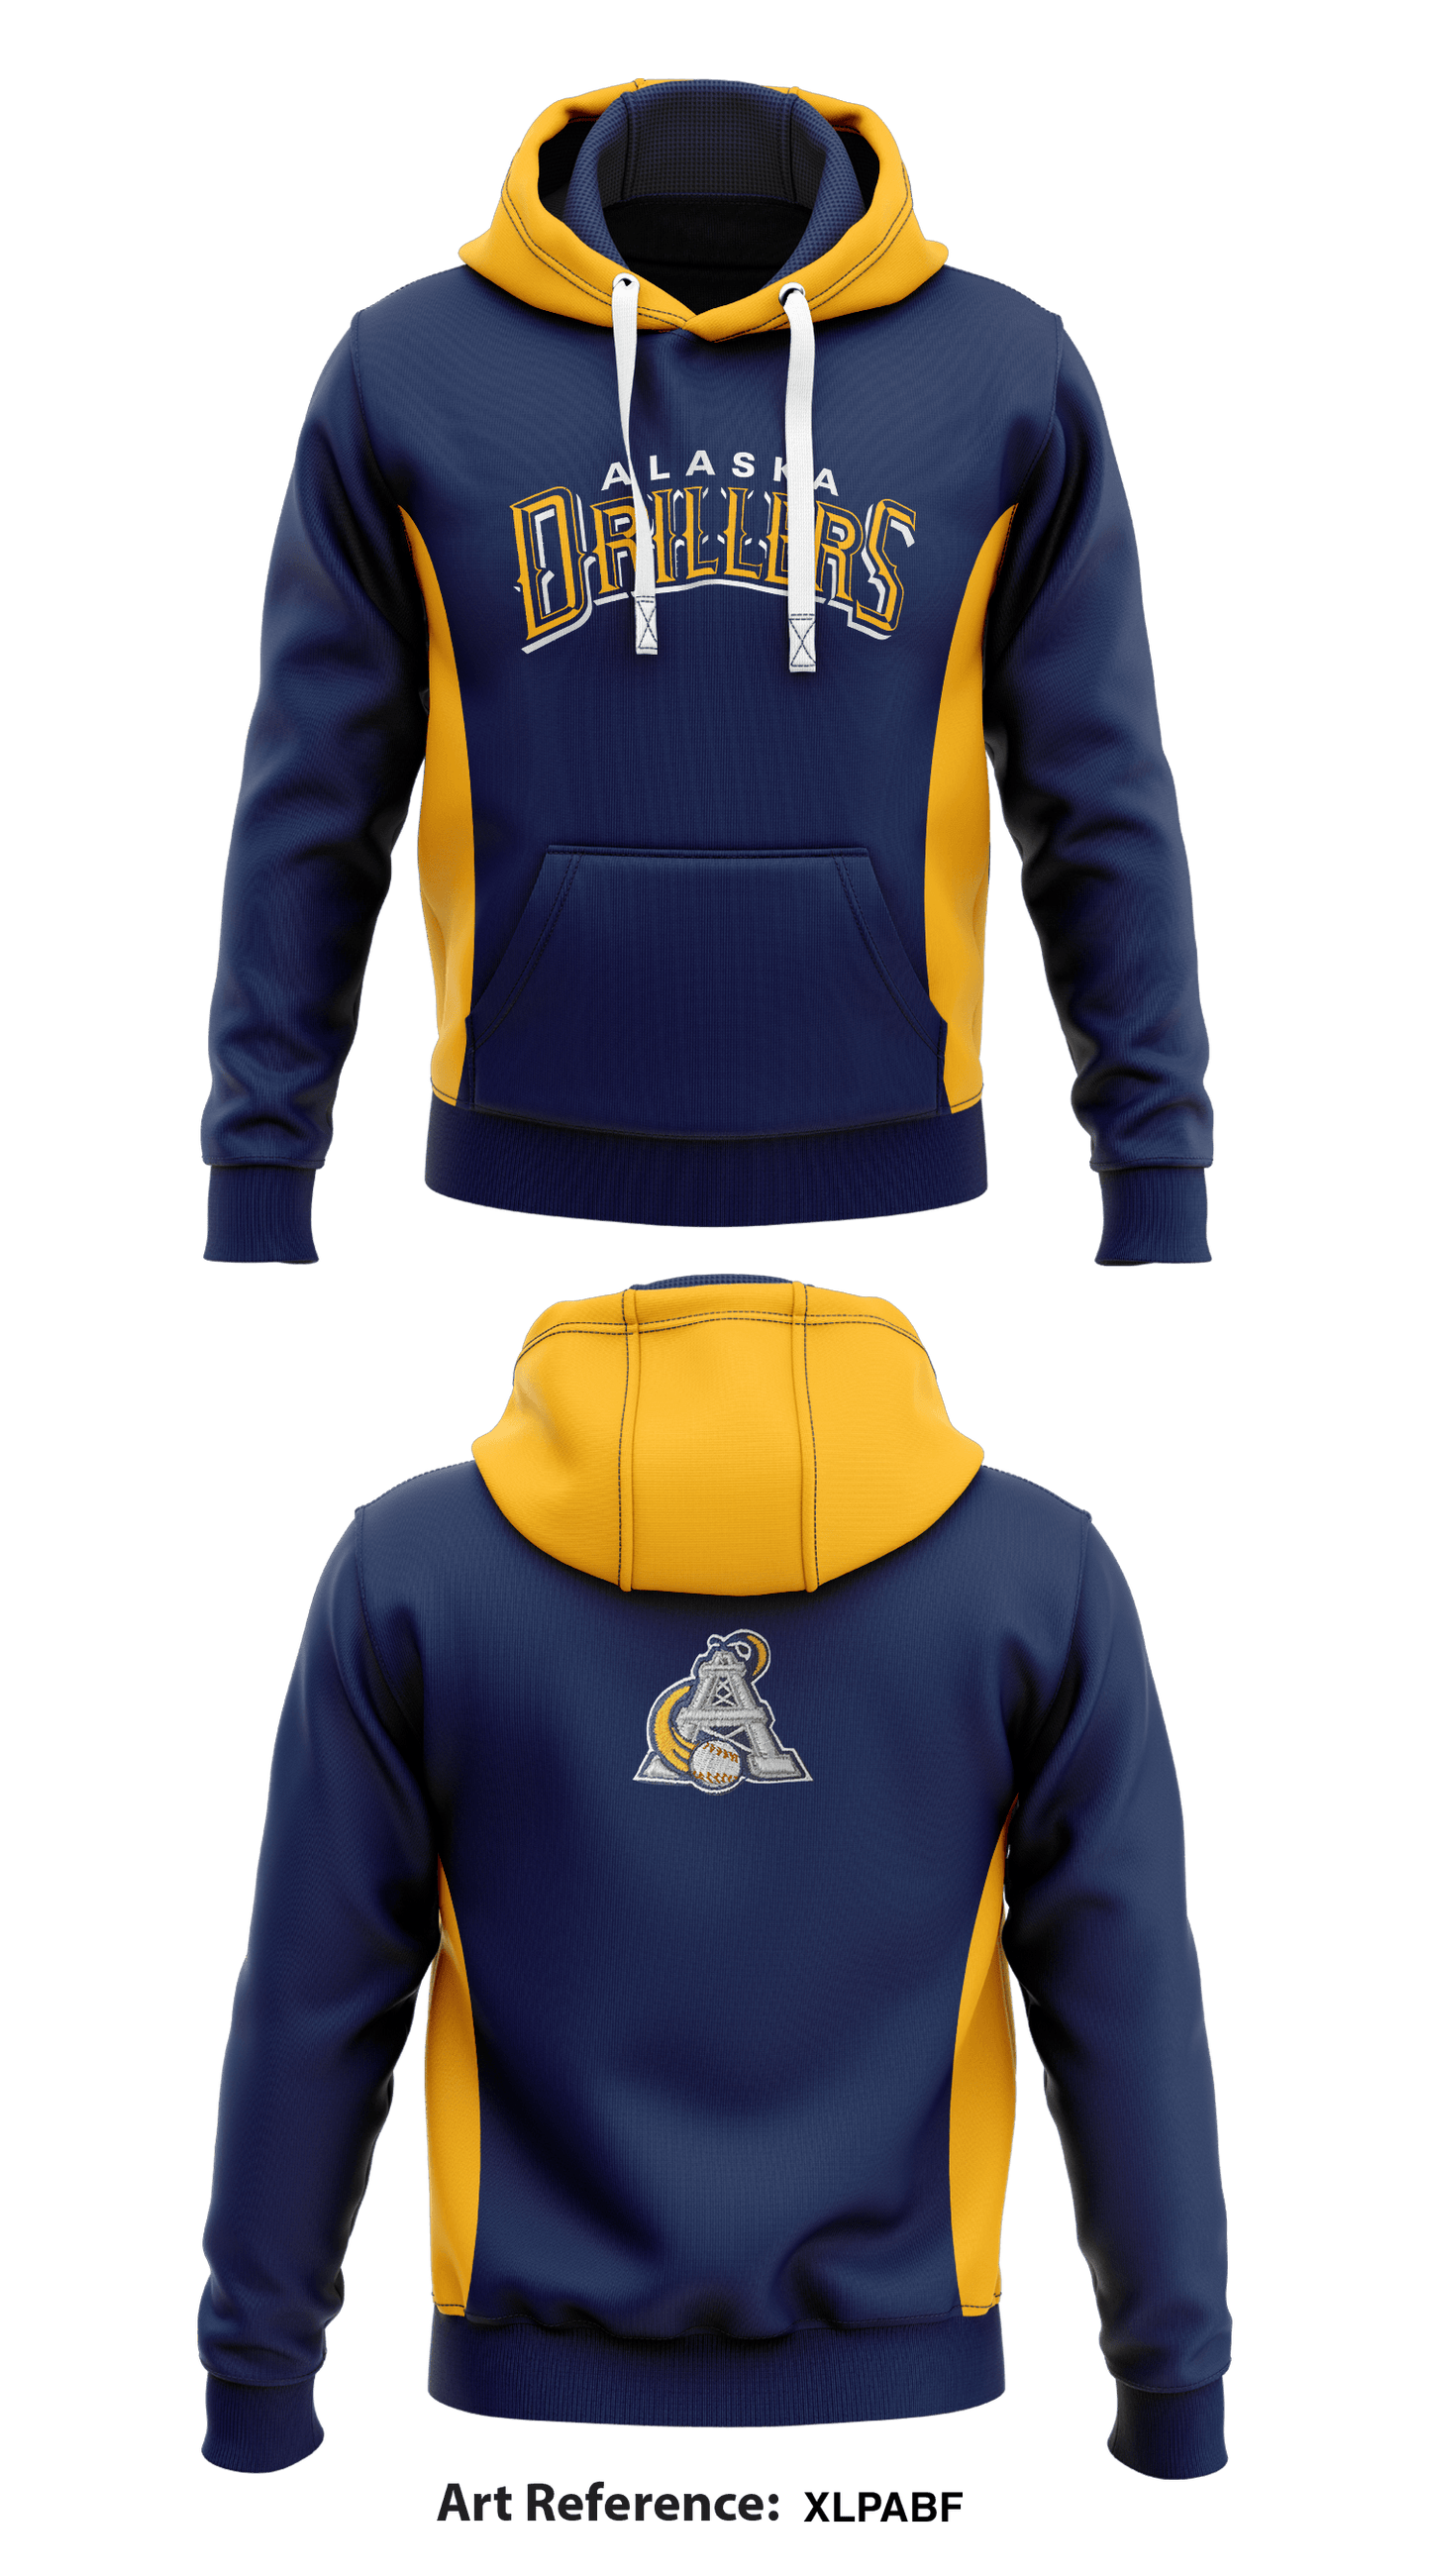 Alaska Drillers Store 1 Core Men's Hooded Performance Sweatshirt - XLpabf